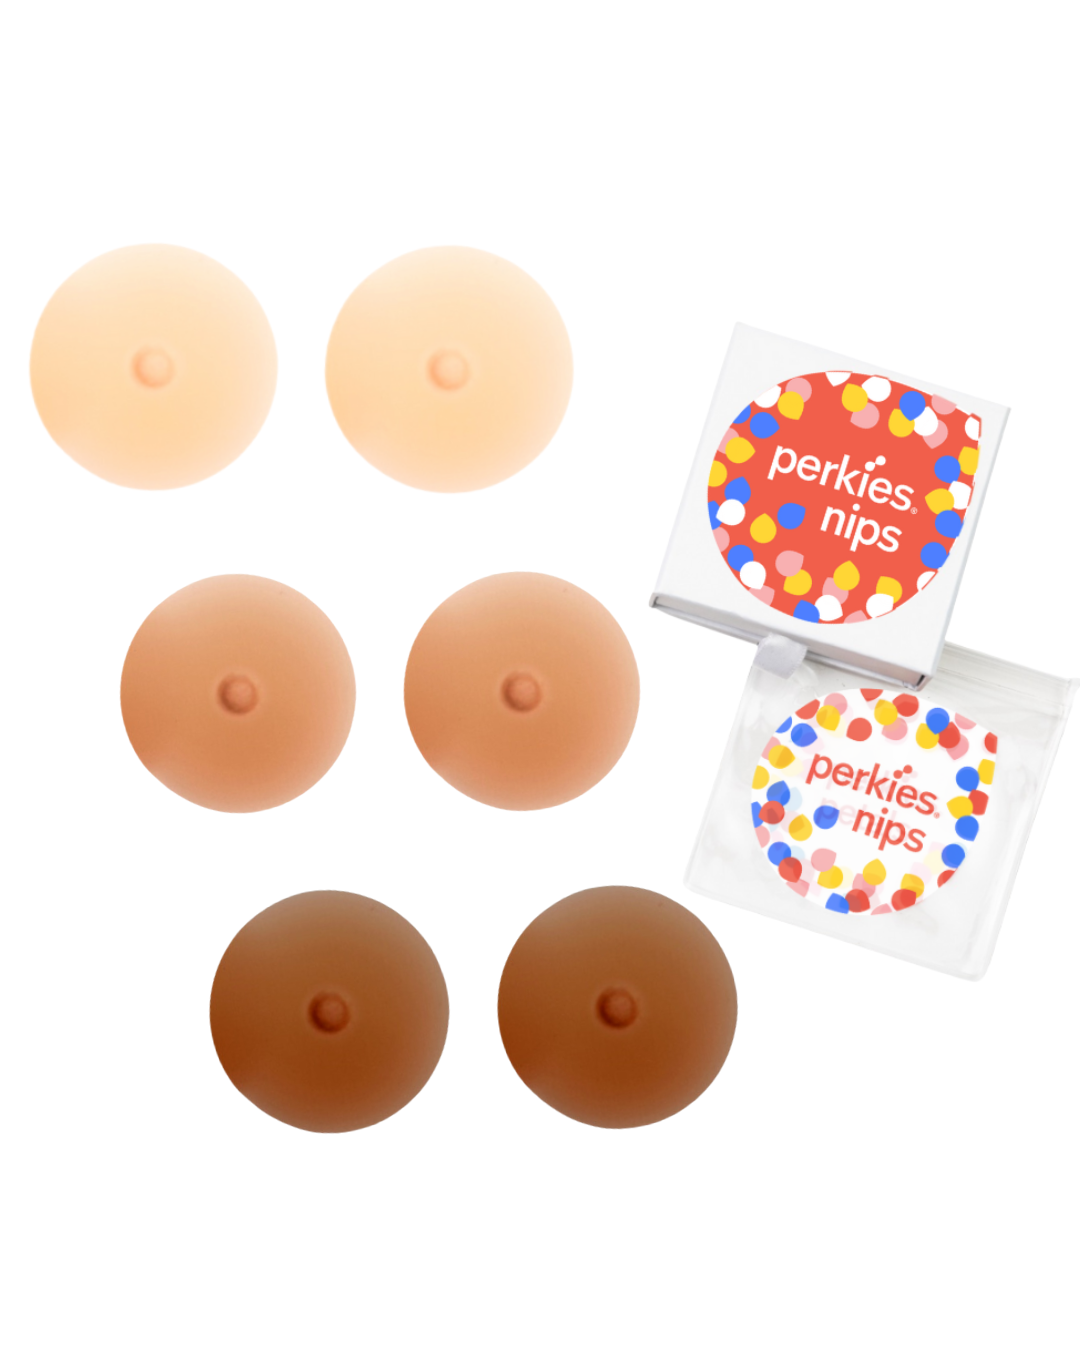 Perkies Nips: Adhesive Nipple Enhancers